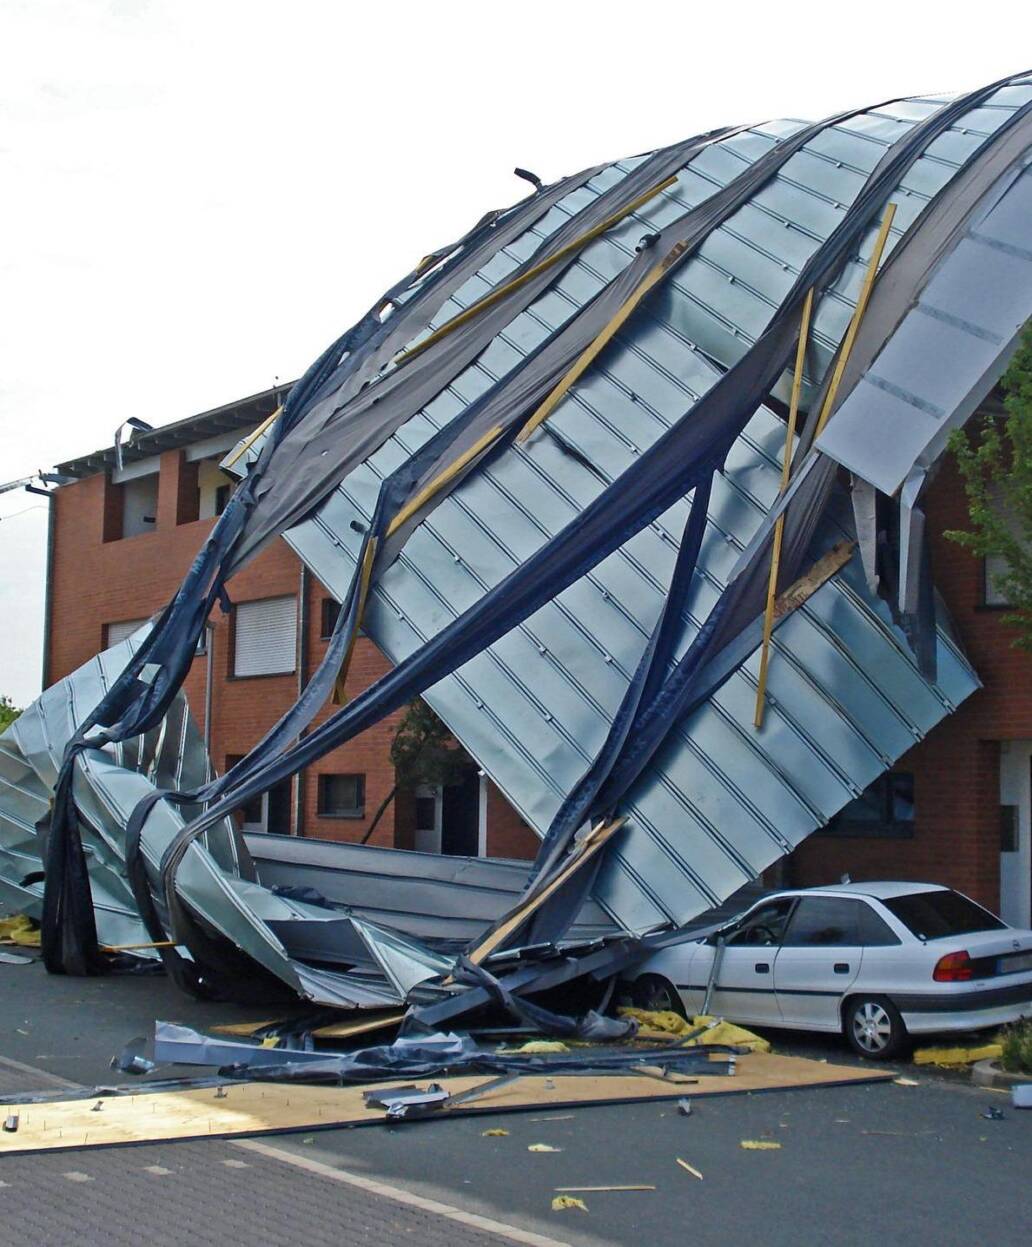 Building fallen from Tornado